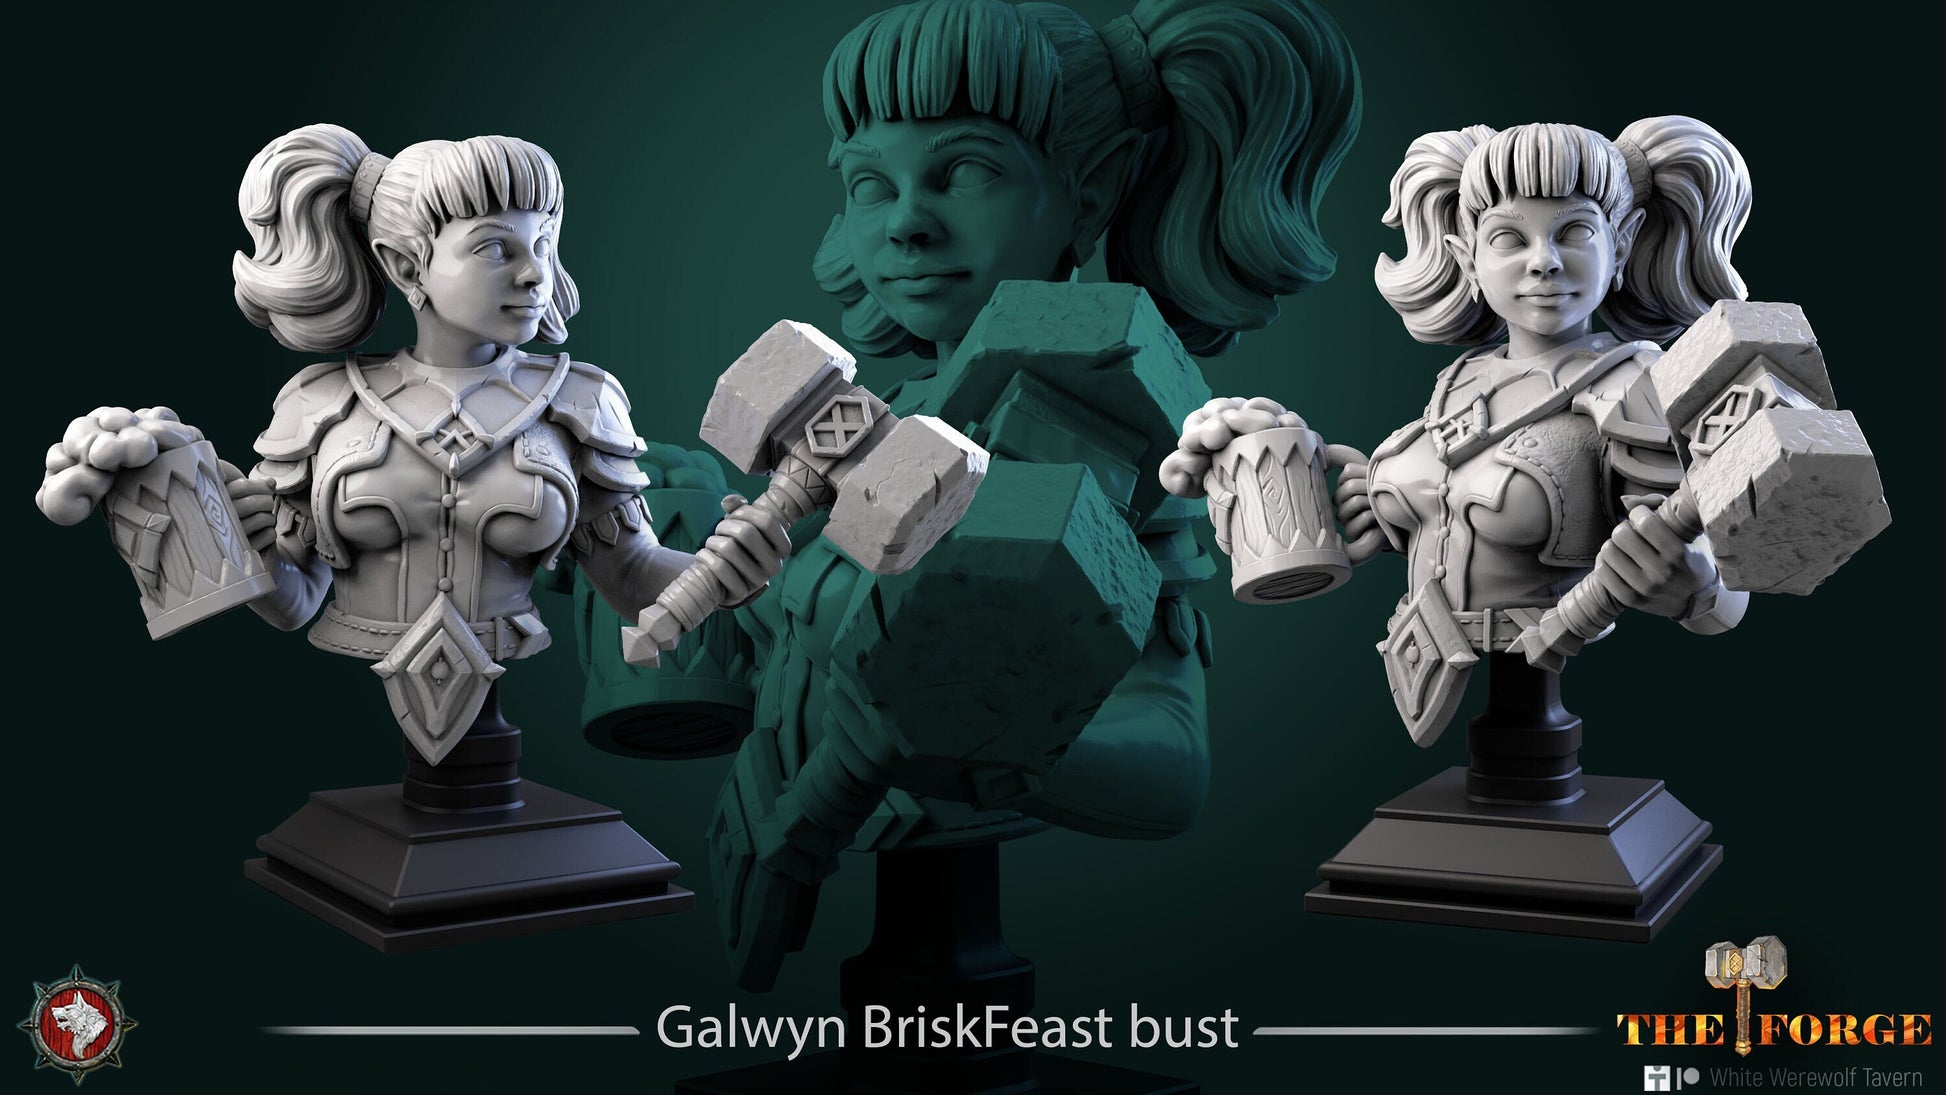 Galwyn BriskFeast Bust | Bust | Resin 3D Printed Miniature | White Werewolf Tavern